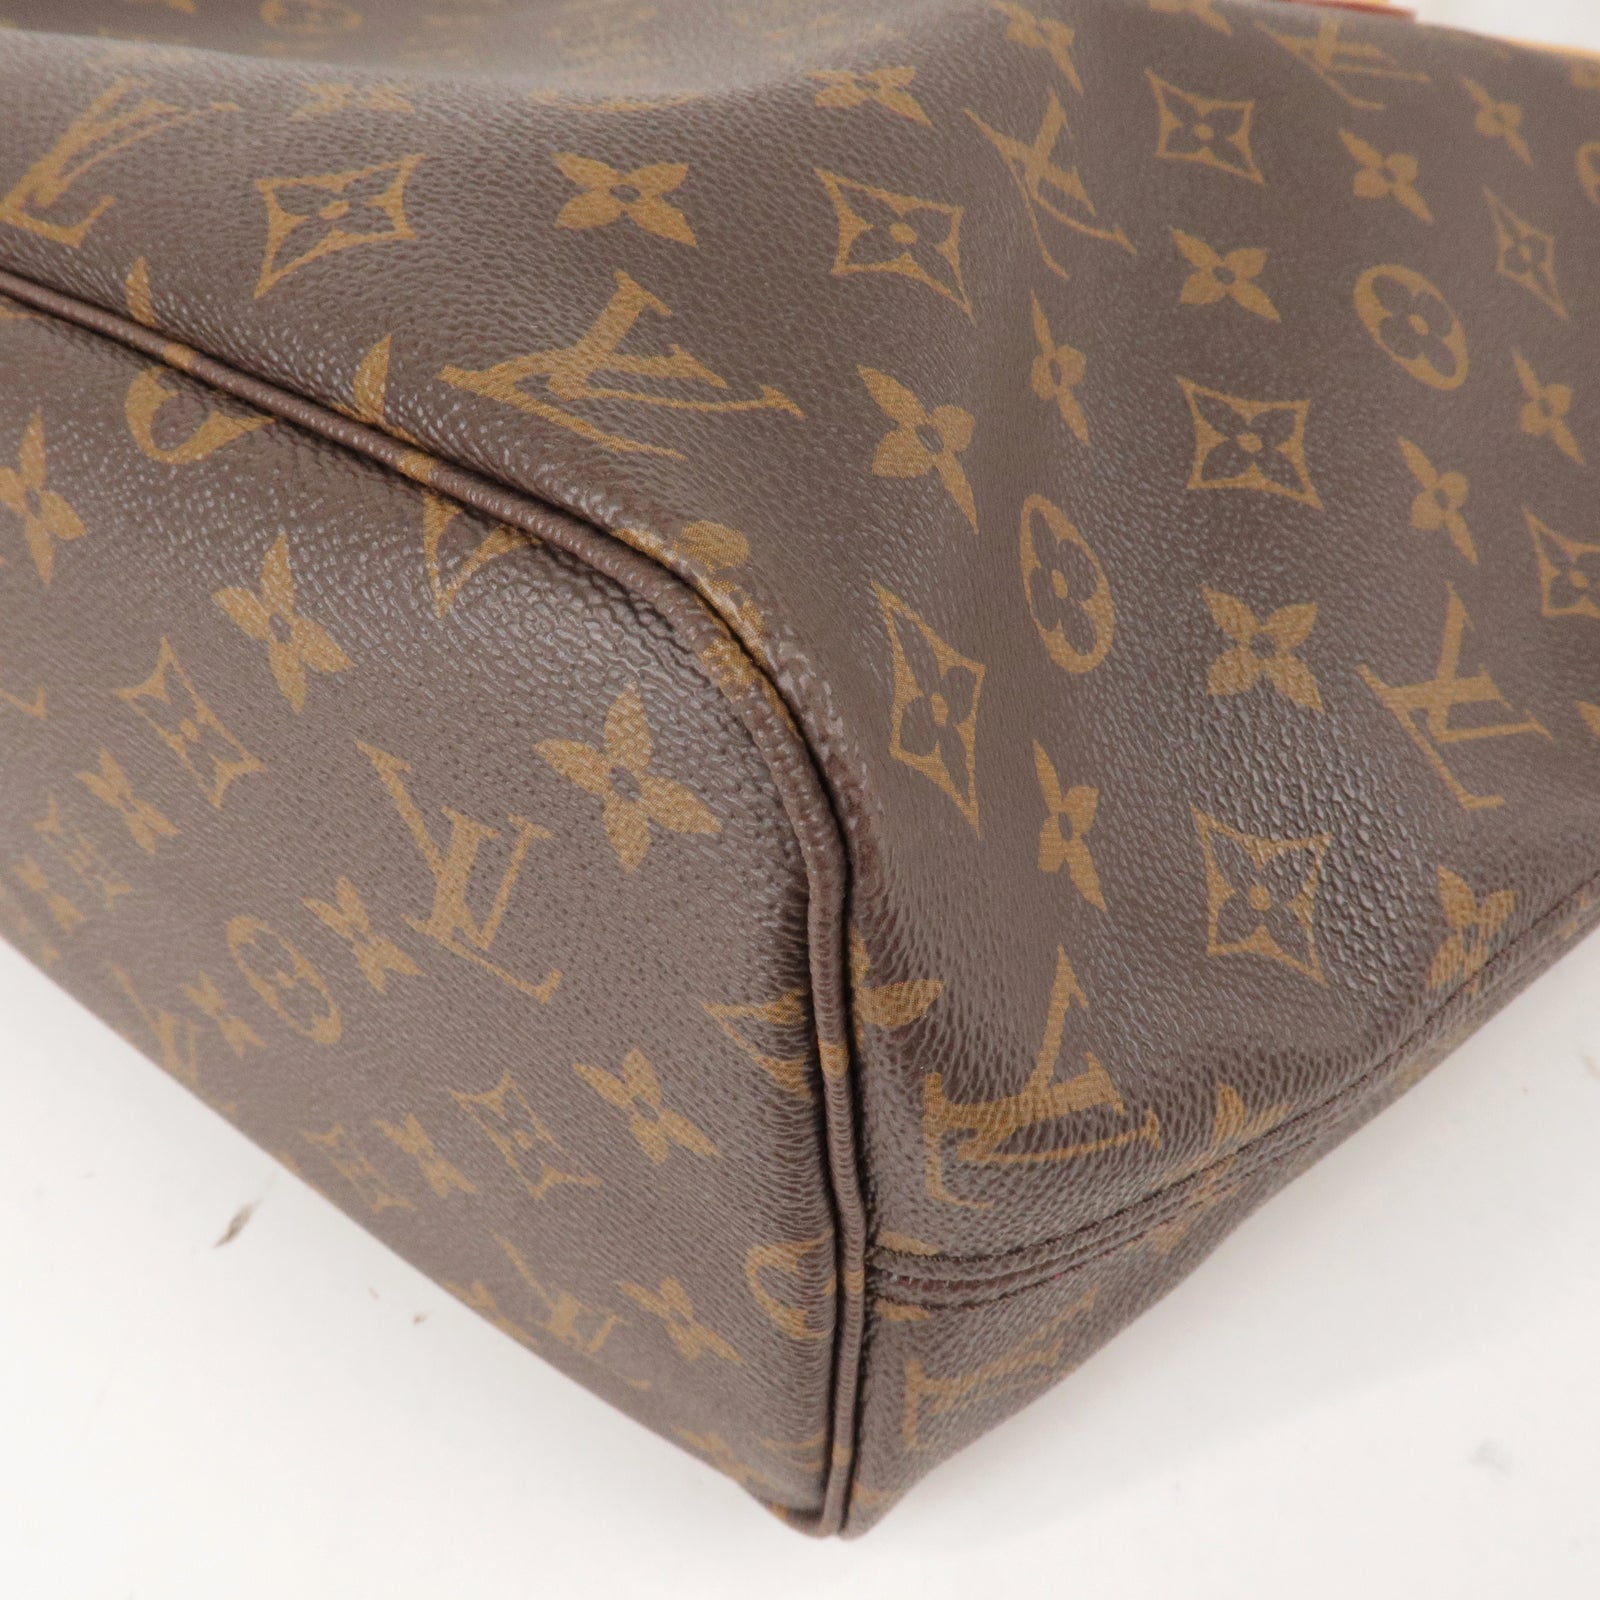 Authentic Louis Vuitton M41178 Monogram Neverfull MM Tote Bag